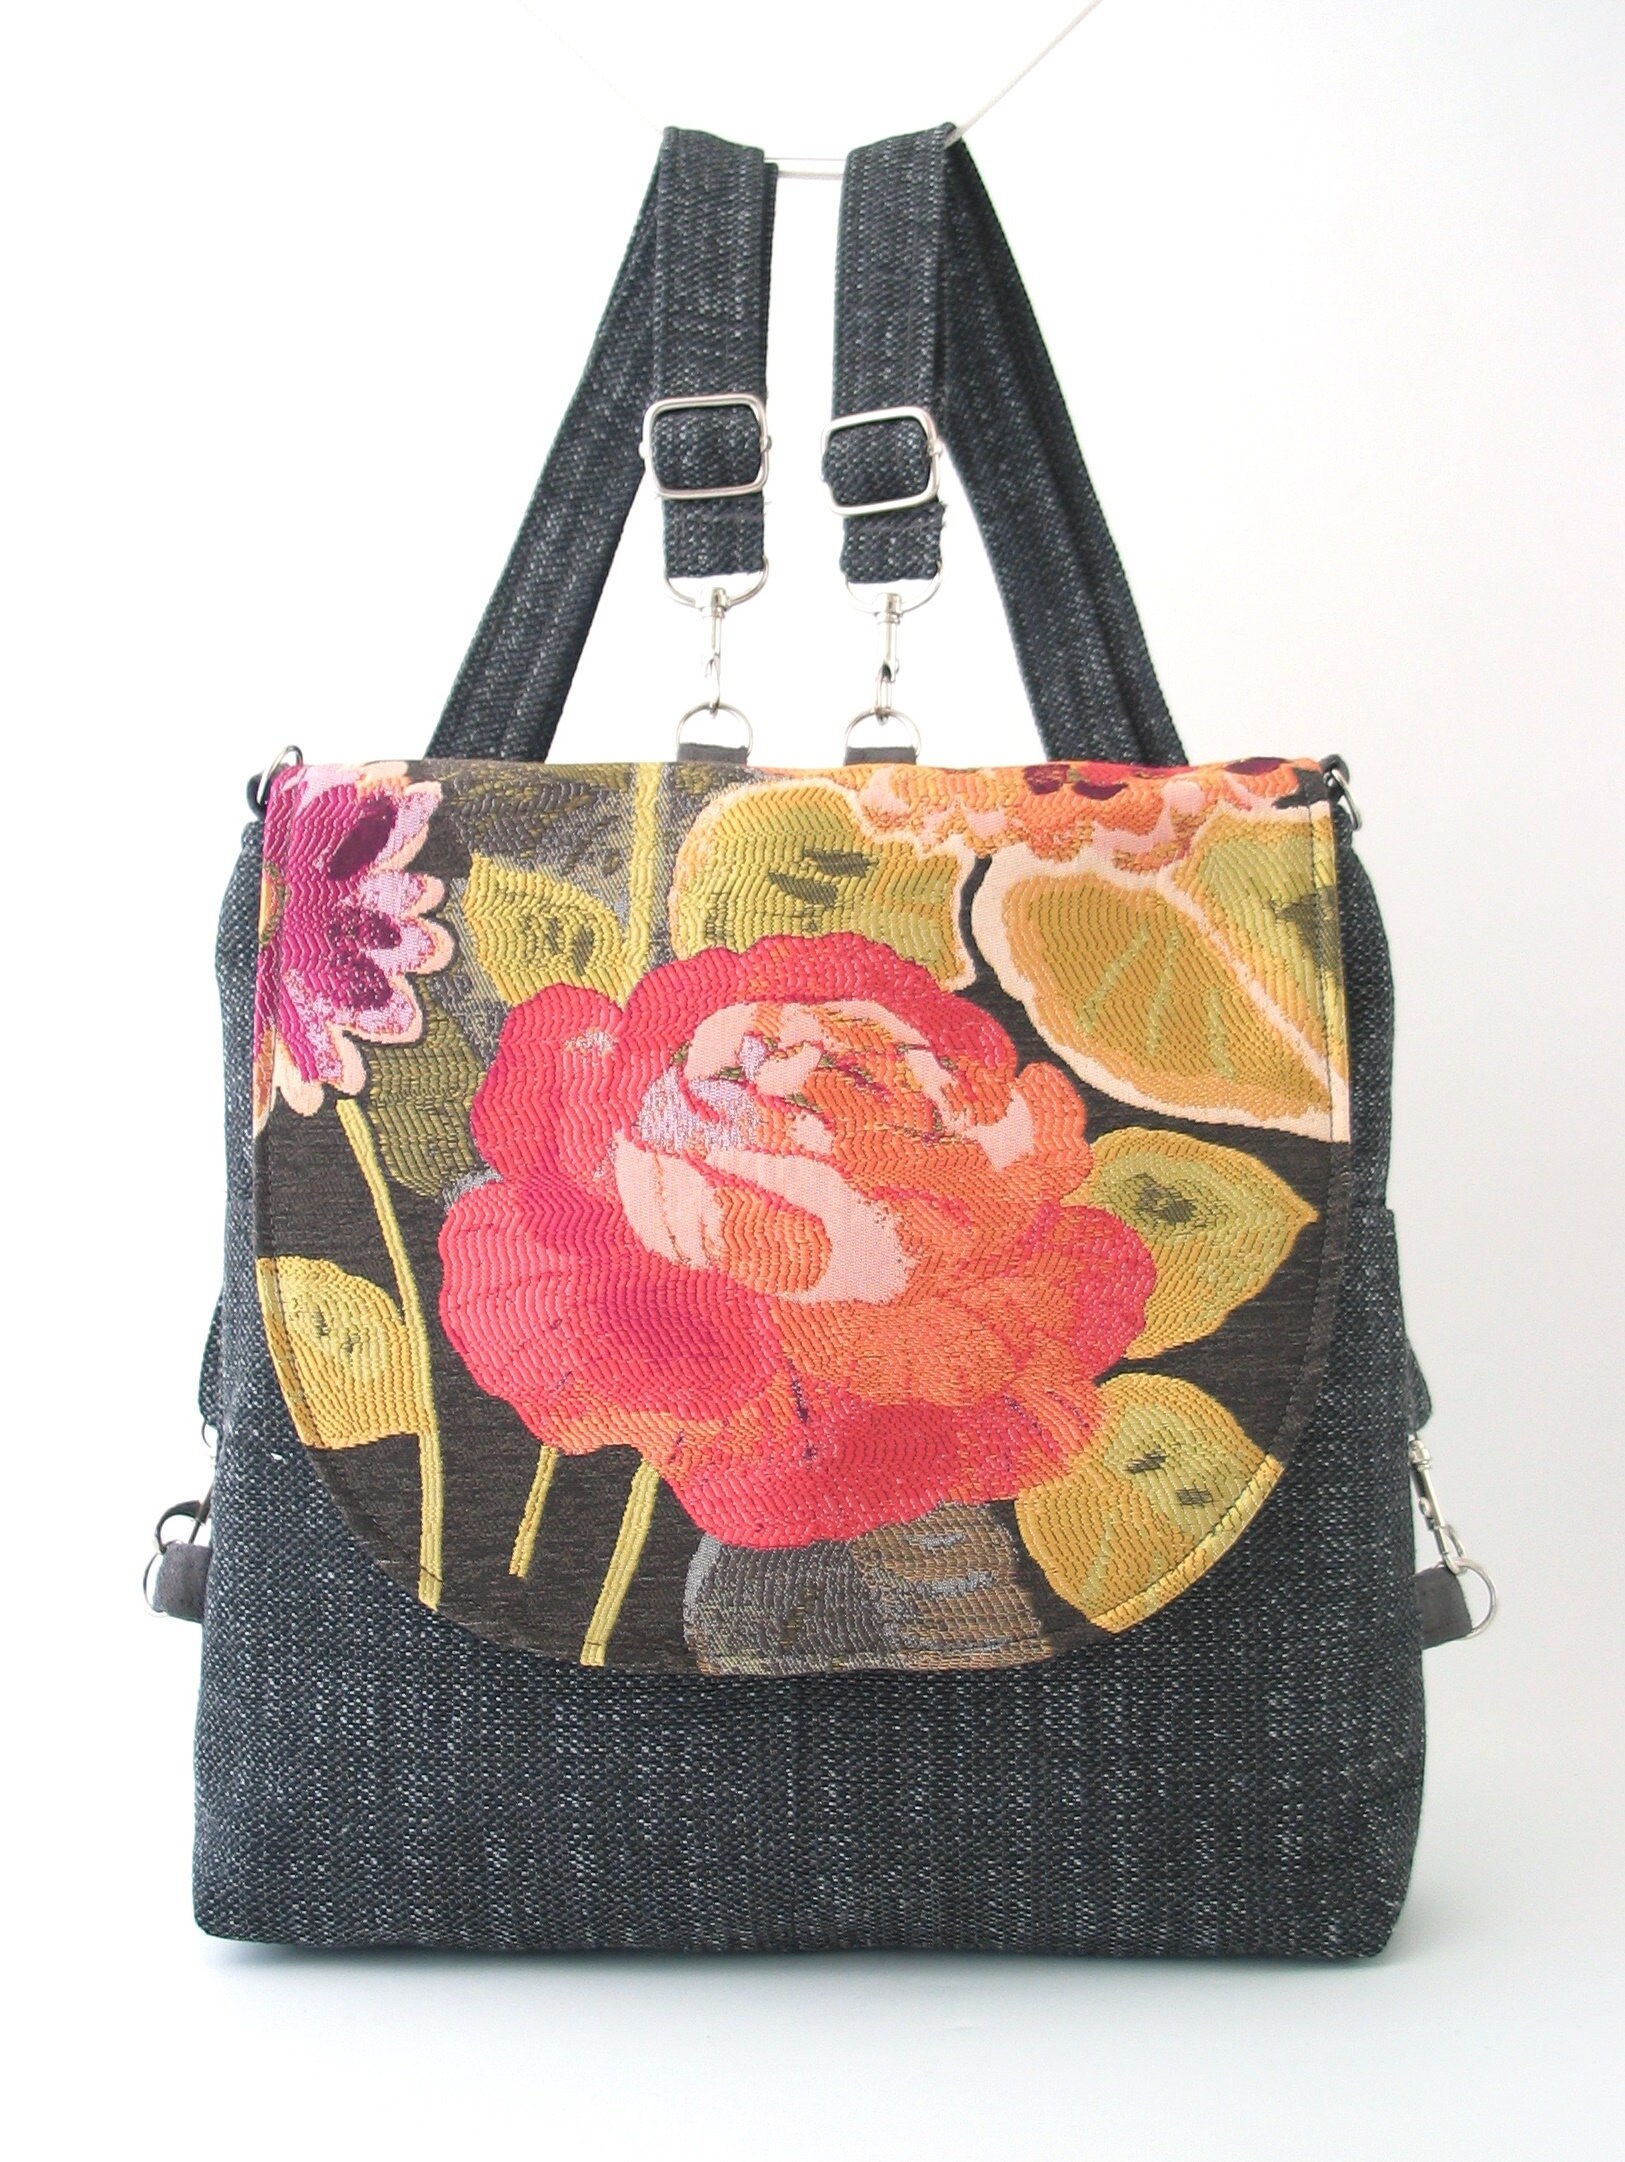 Backpack Purse Crossbody Bag for Women Floral Handbag | Etsy